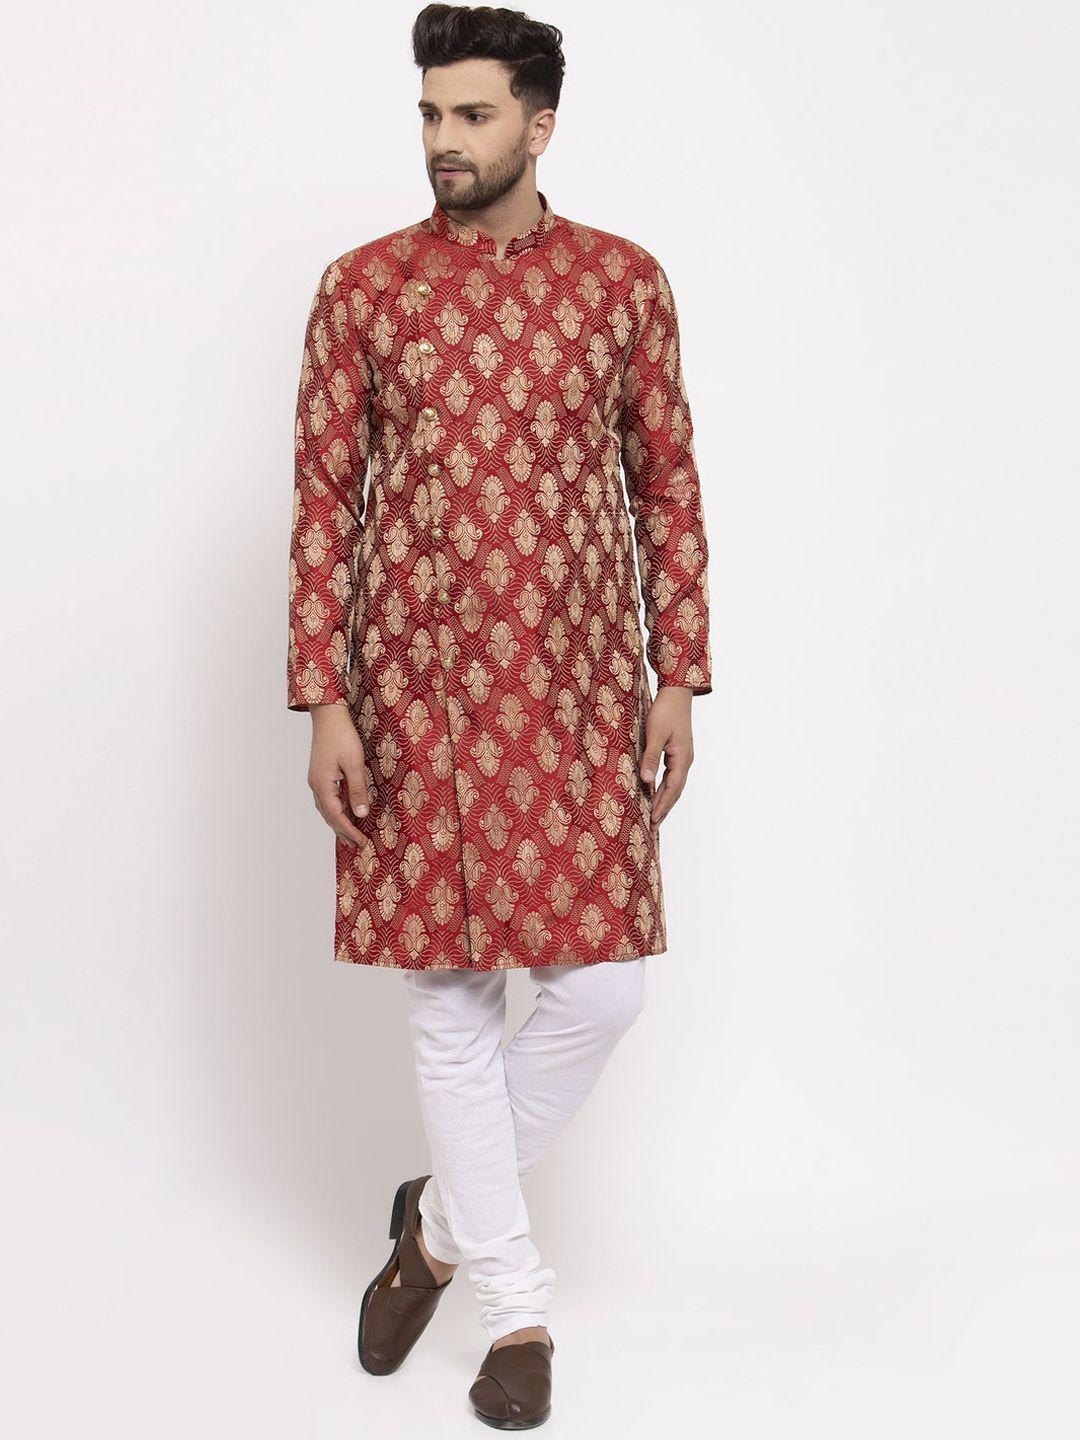 jompers-men-maroon-&-white-printed-kurta-with-churidar